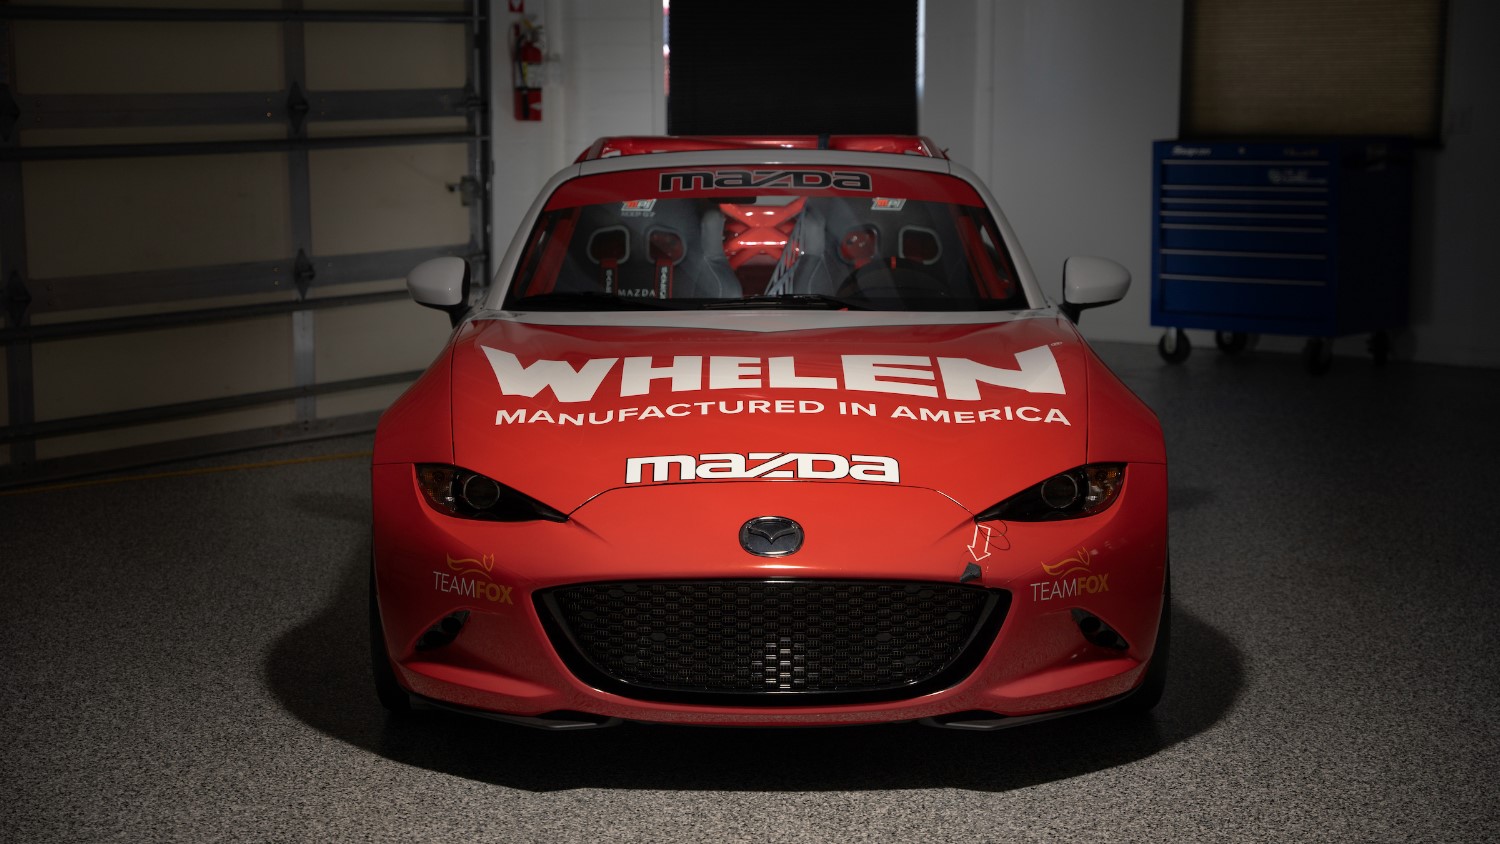 Whelen Mazda sponsor